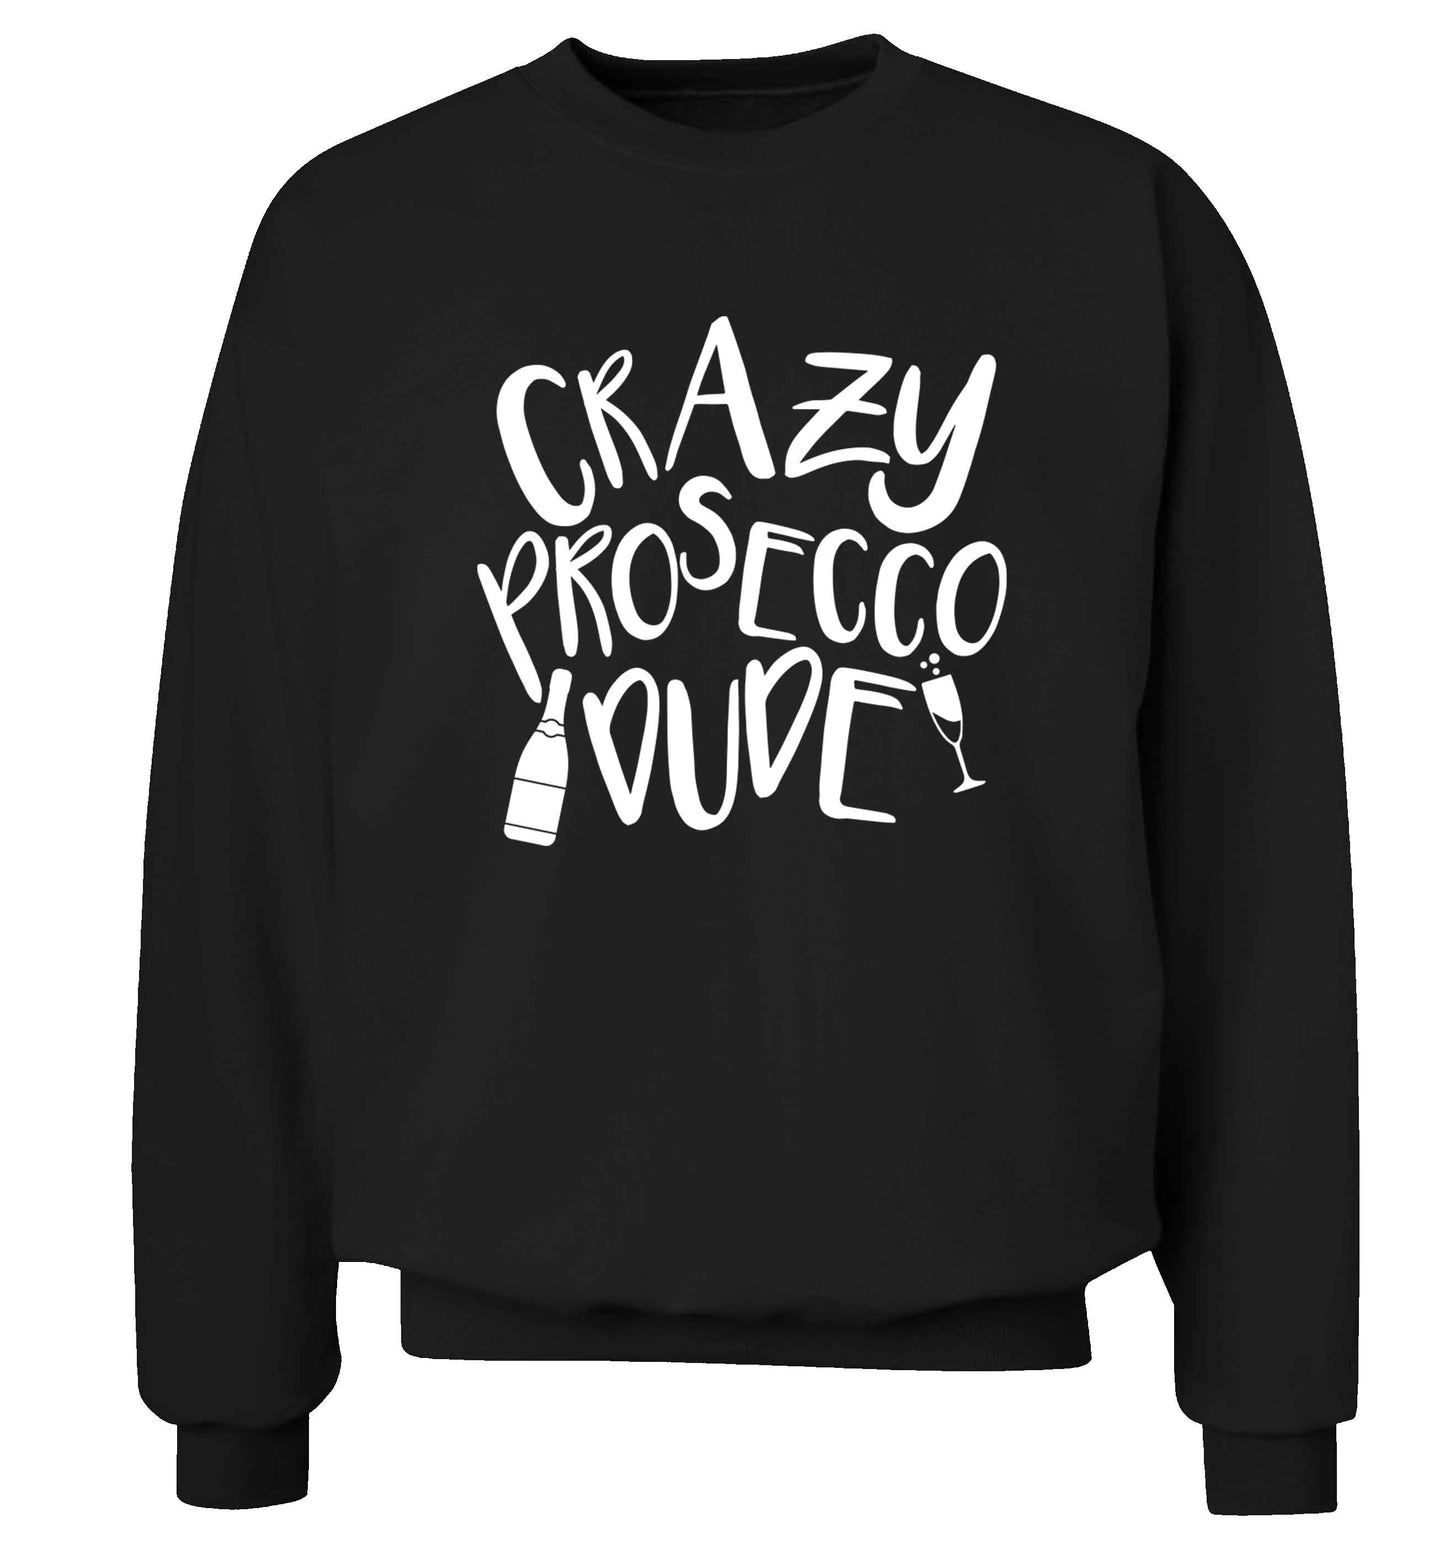 Crazy prosecco dude Adult's unisex black Sweater 2XL